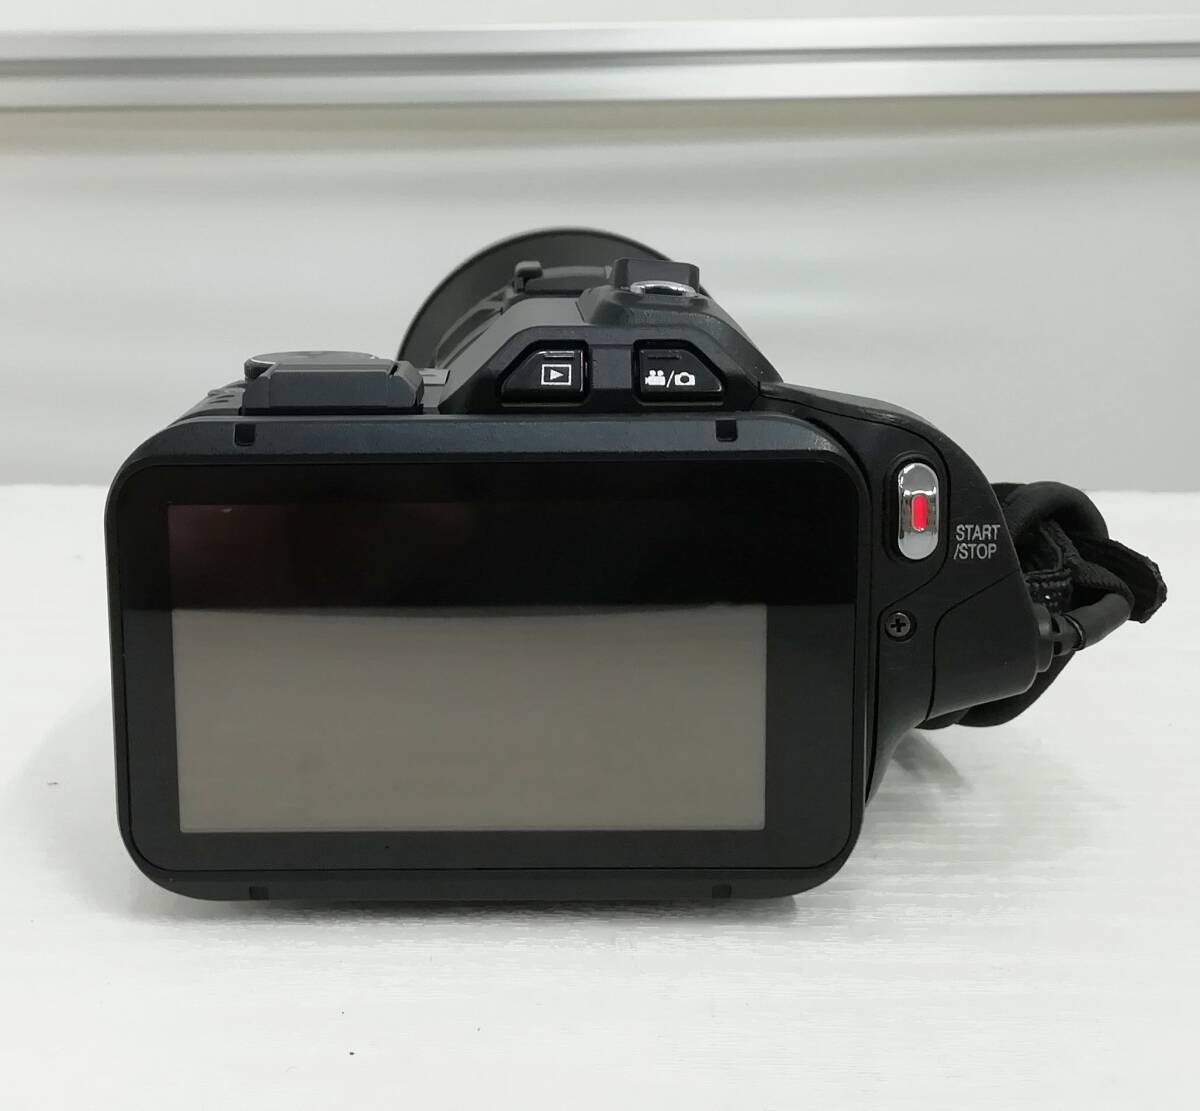 JVC GC-LJ25B2 スポーツコーチング カメラ システム対応 ビデオカメラ 2016年 映像素子:1276万画素 デジタルハイビジョン方式【H24042410】_画像4